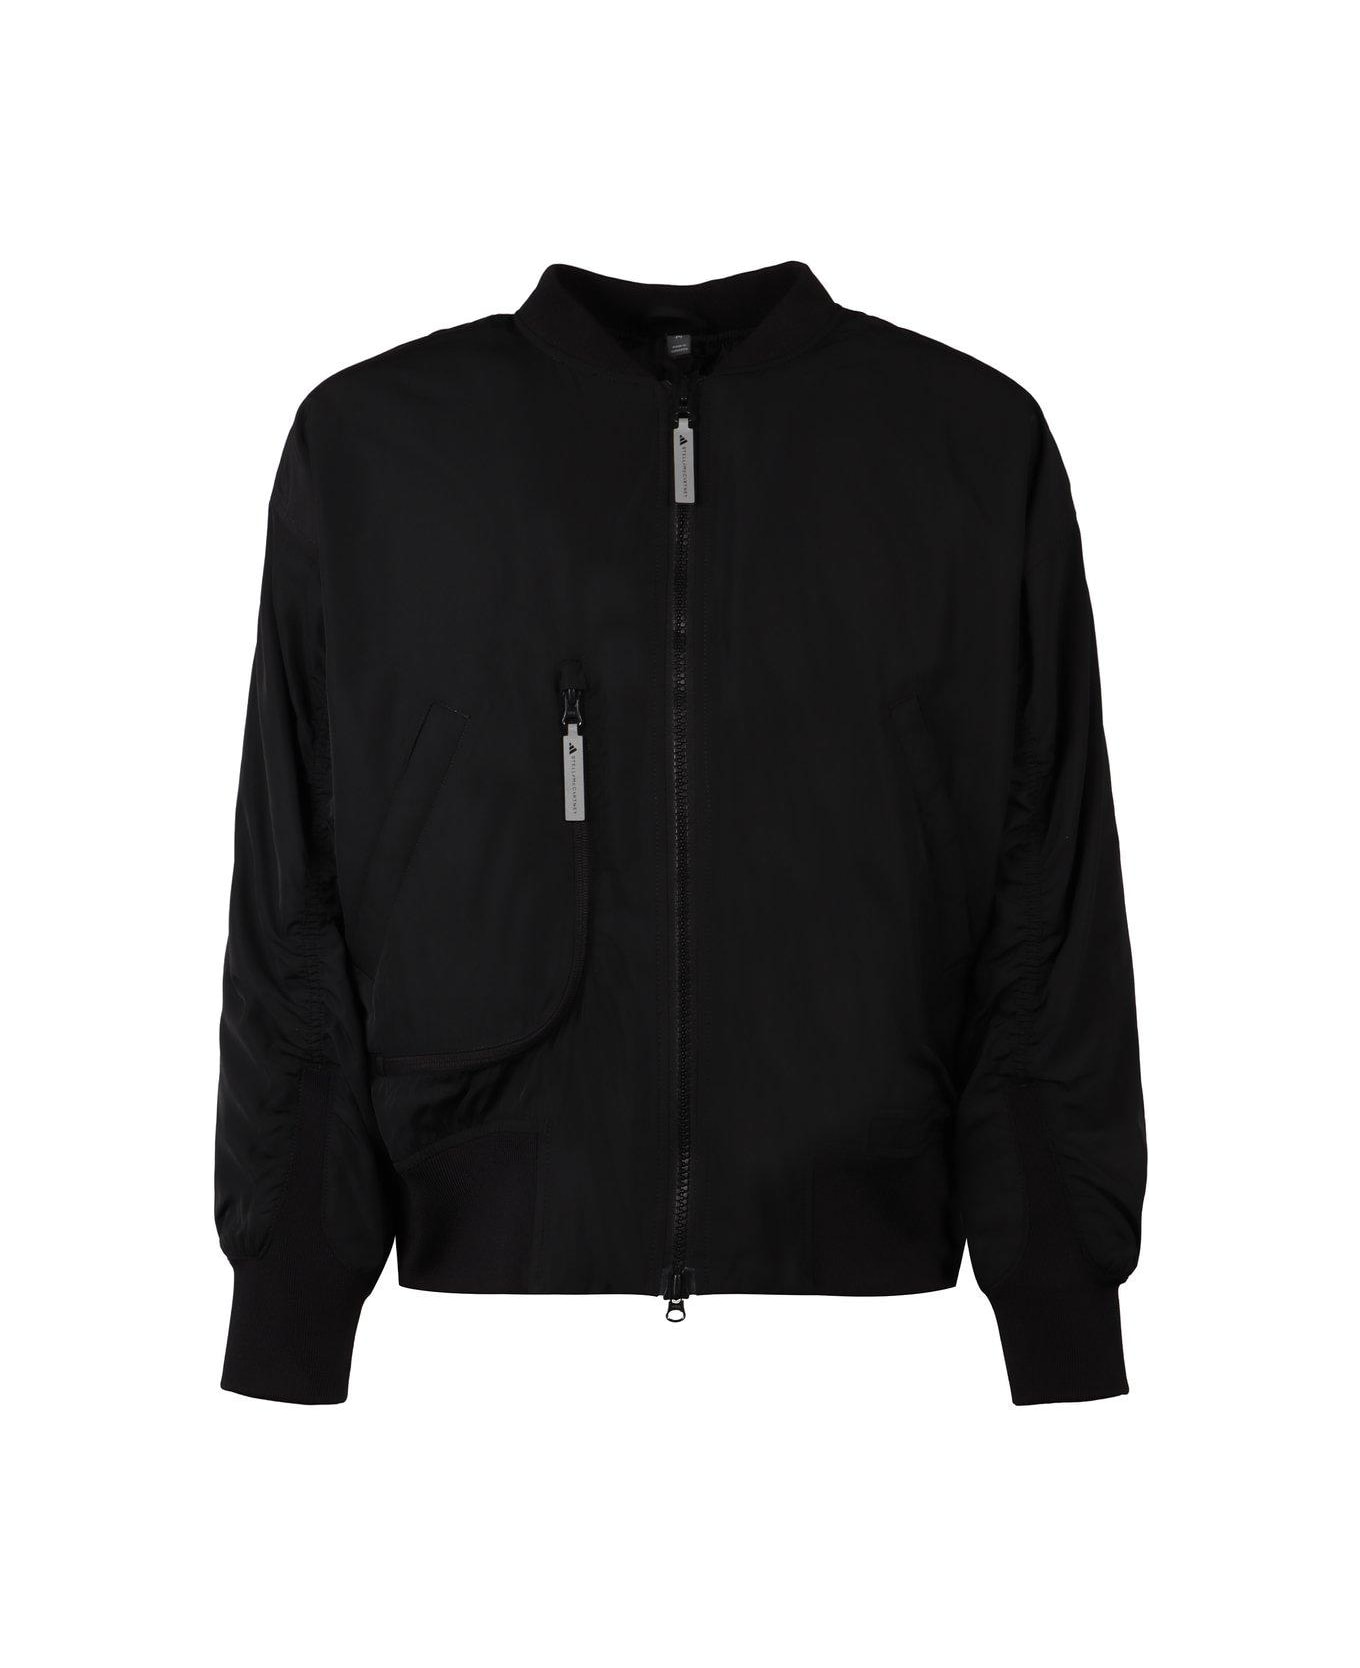 Adidas by Stella McCartney Band Collared Zip-up Bomber Jacket - Black